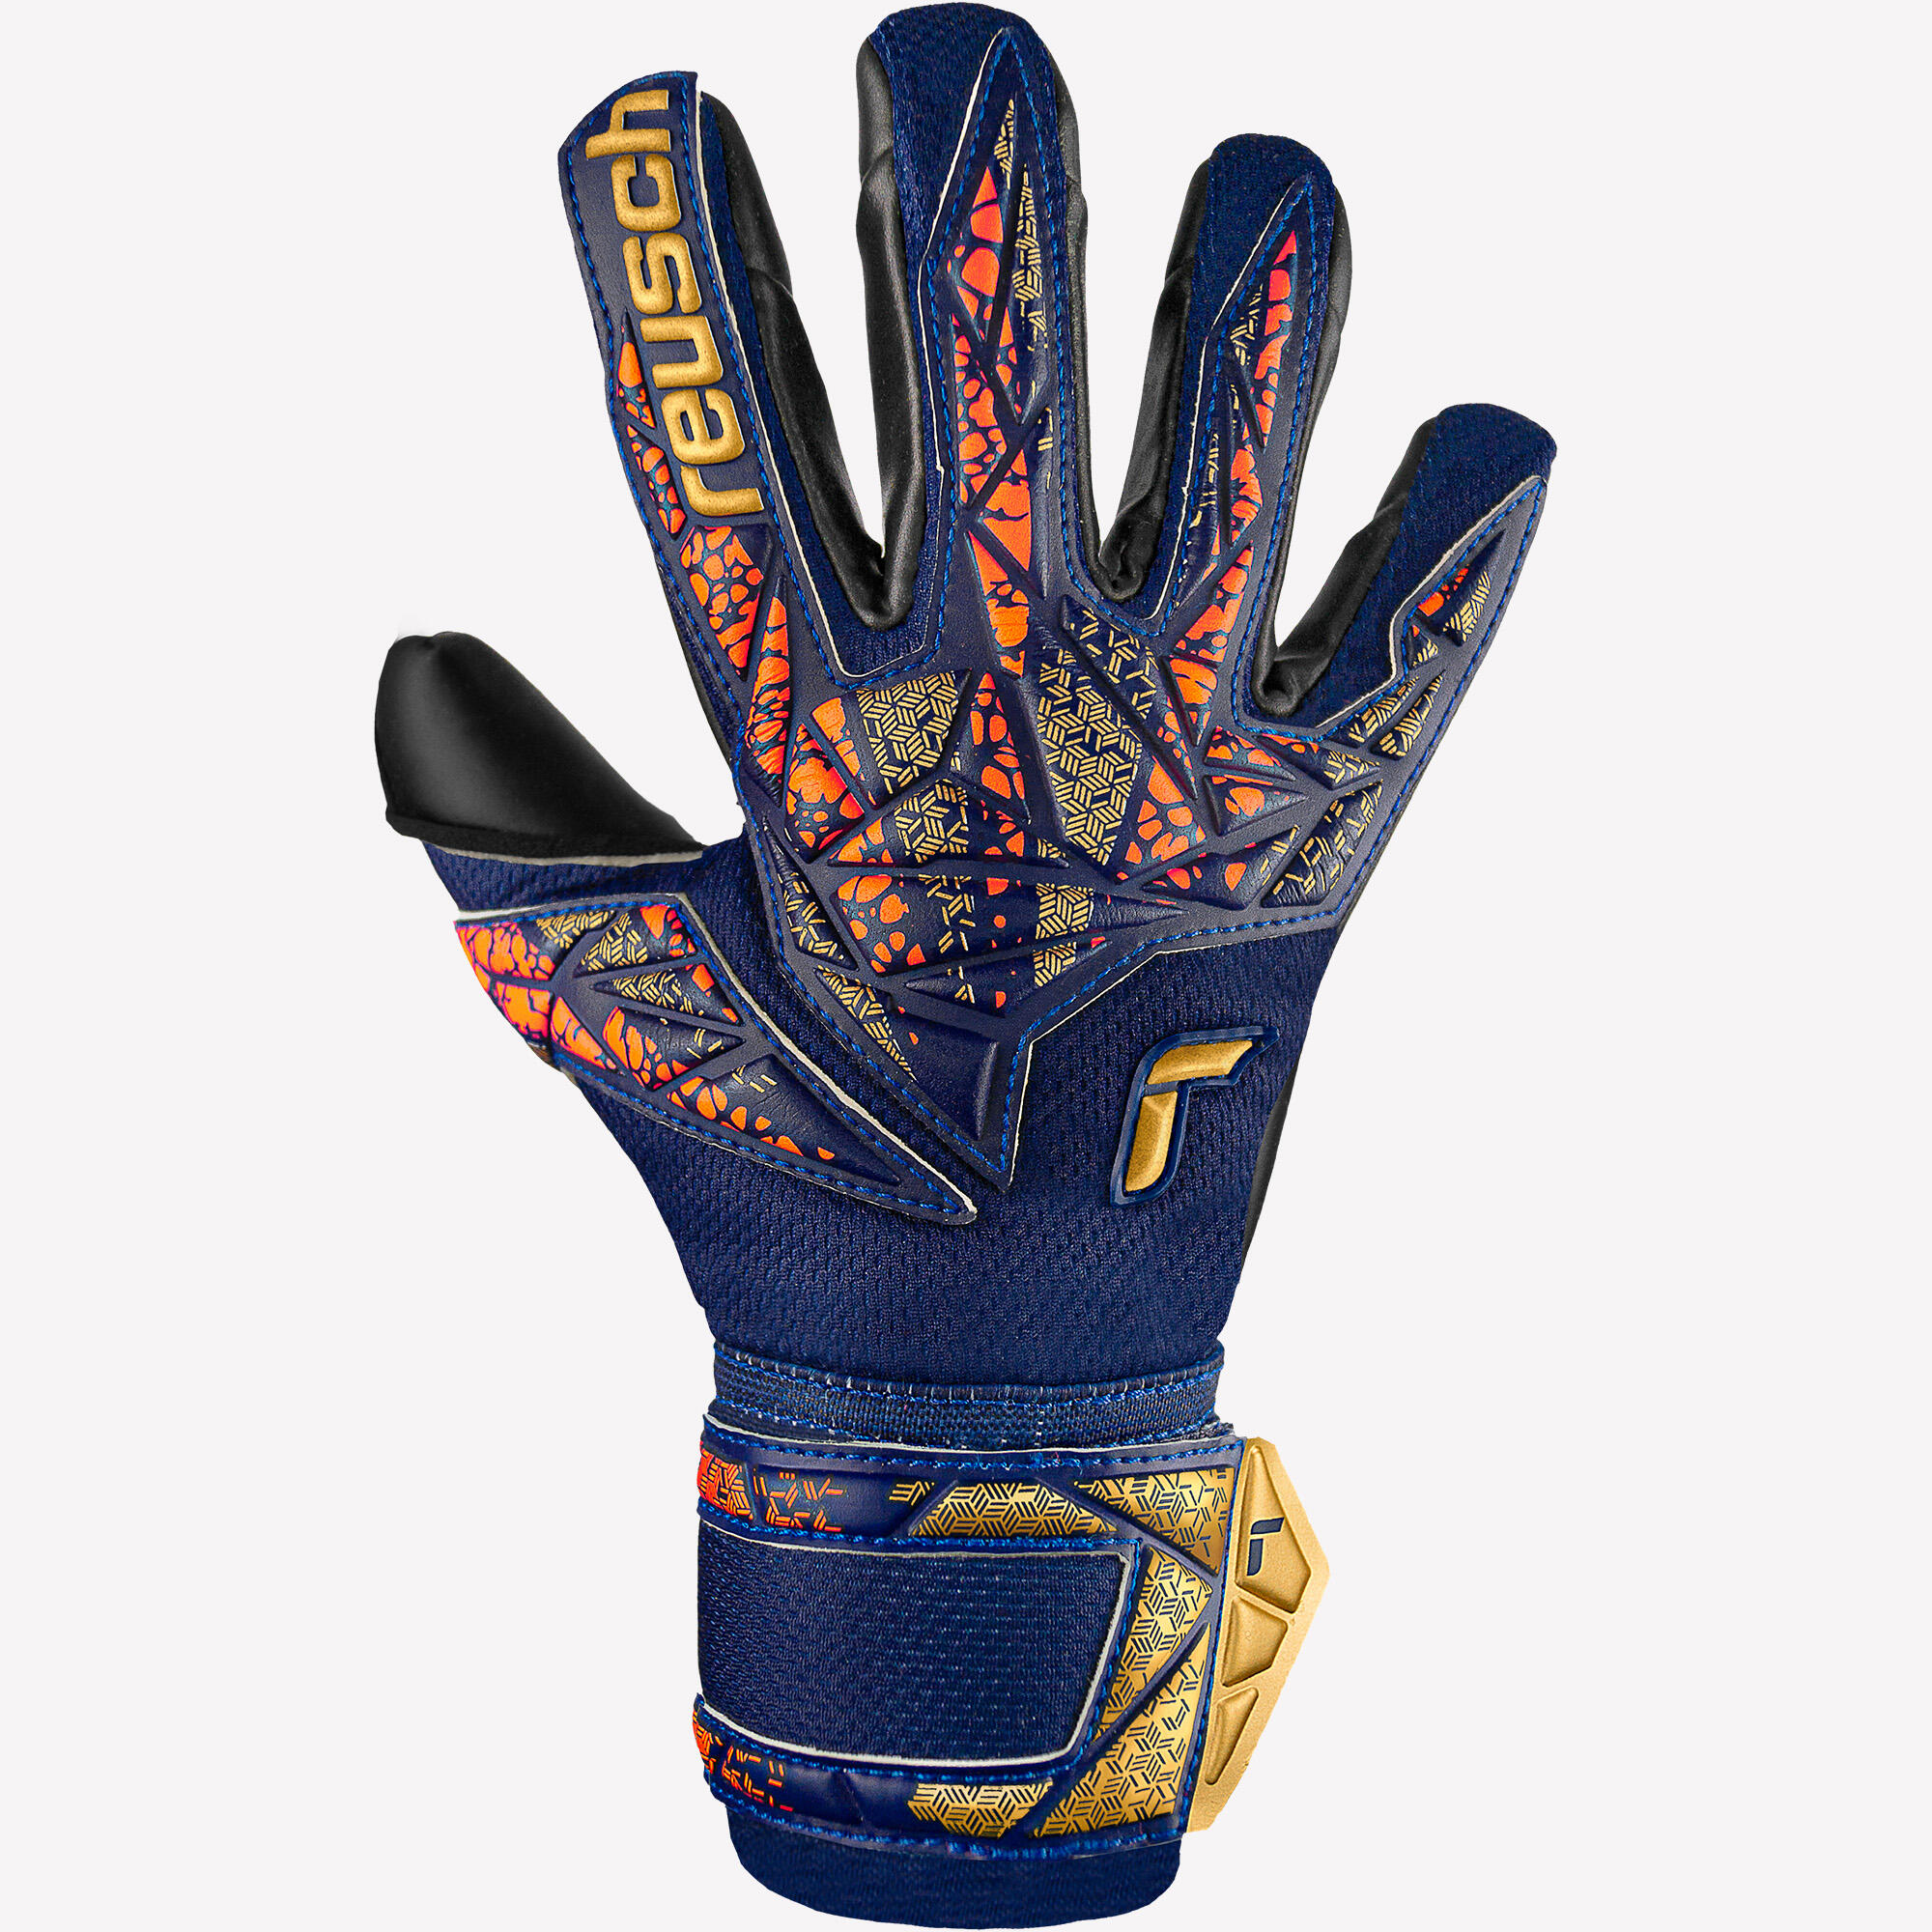 Adult Goalkeeper Gloves Attrakt Gold X 24 7/8